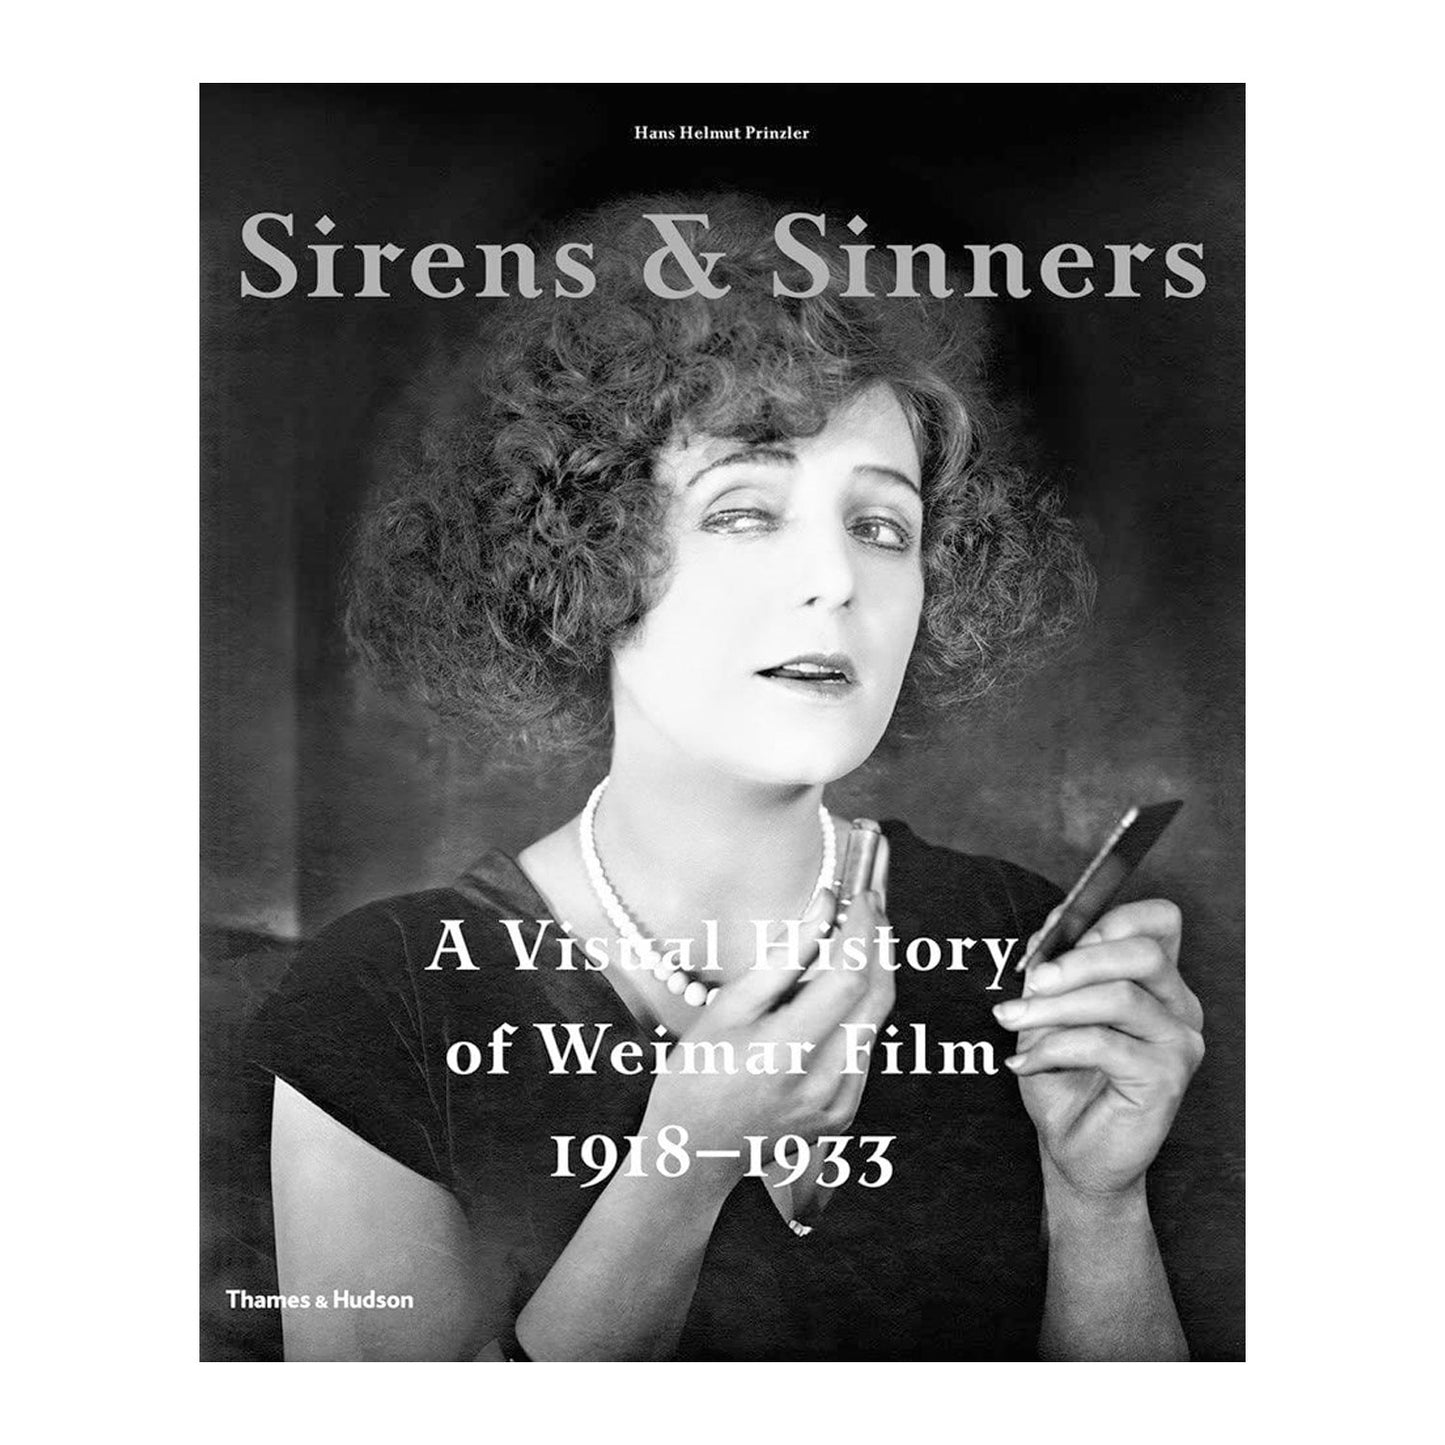 Sirens and Sinners by Hans Helmut Prinzler Photo Museum Ireland 